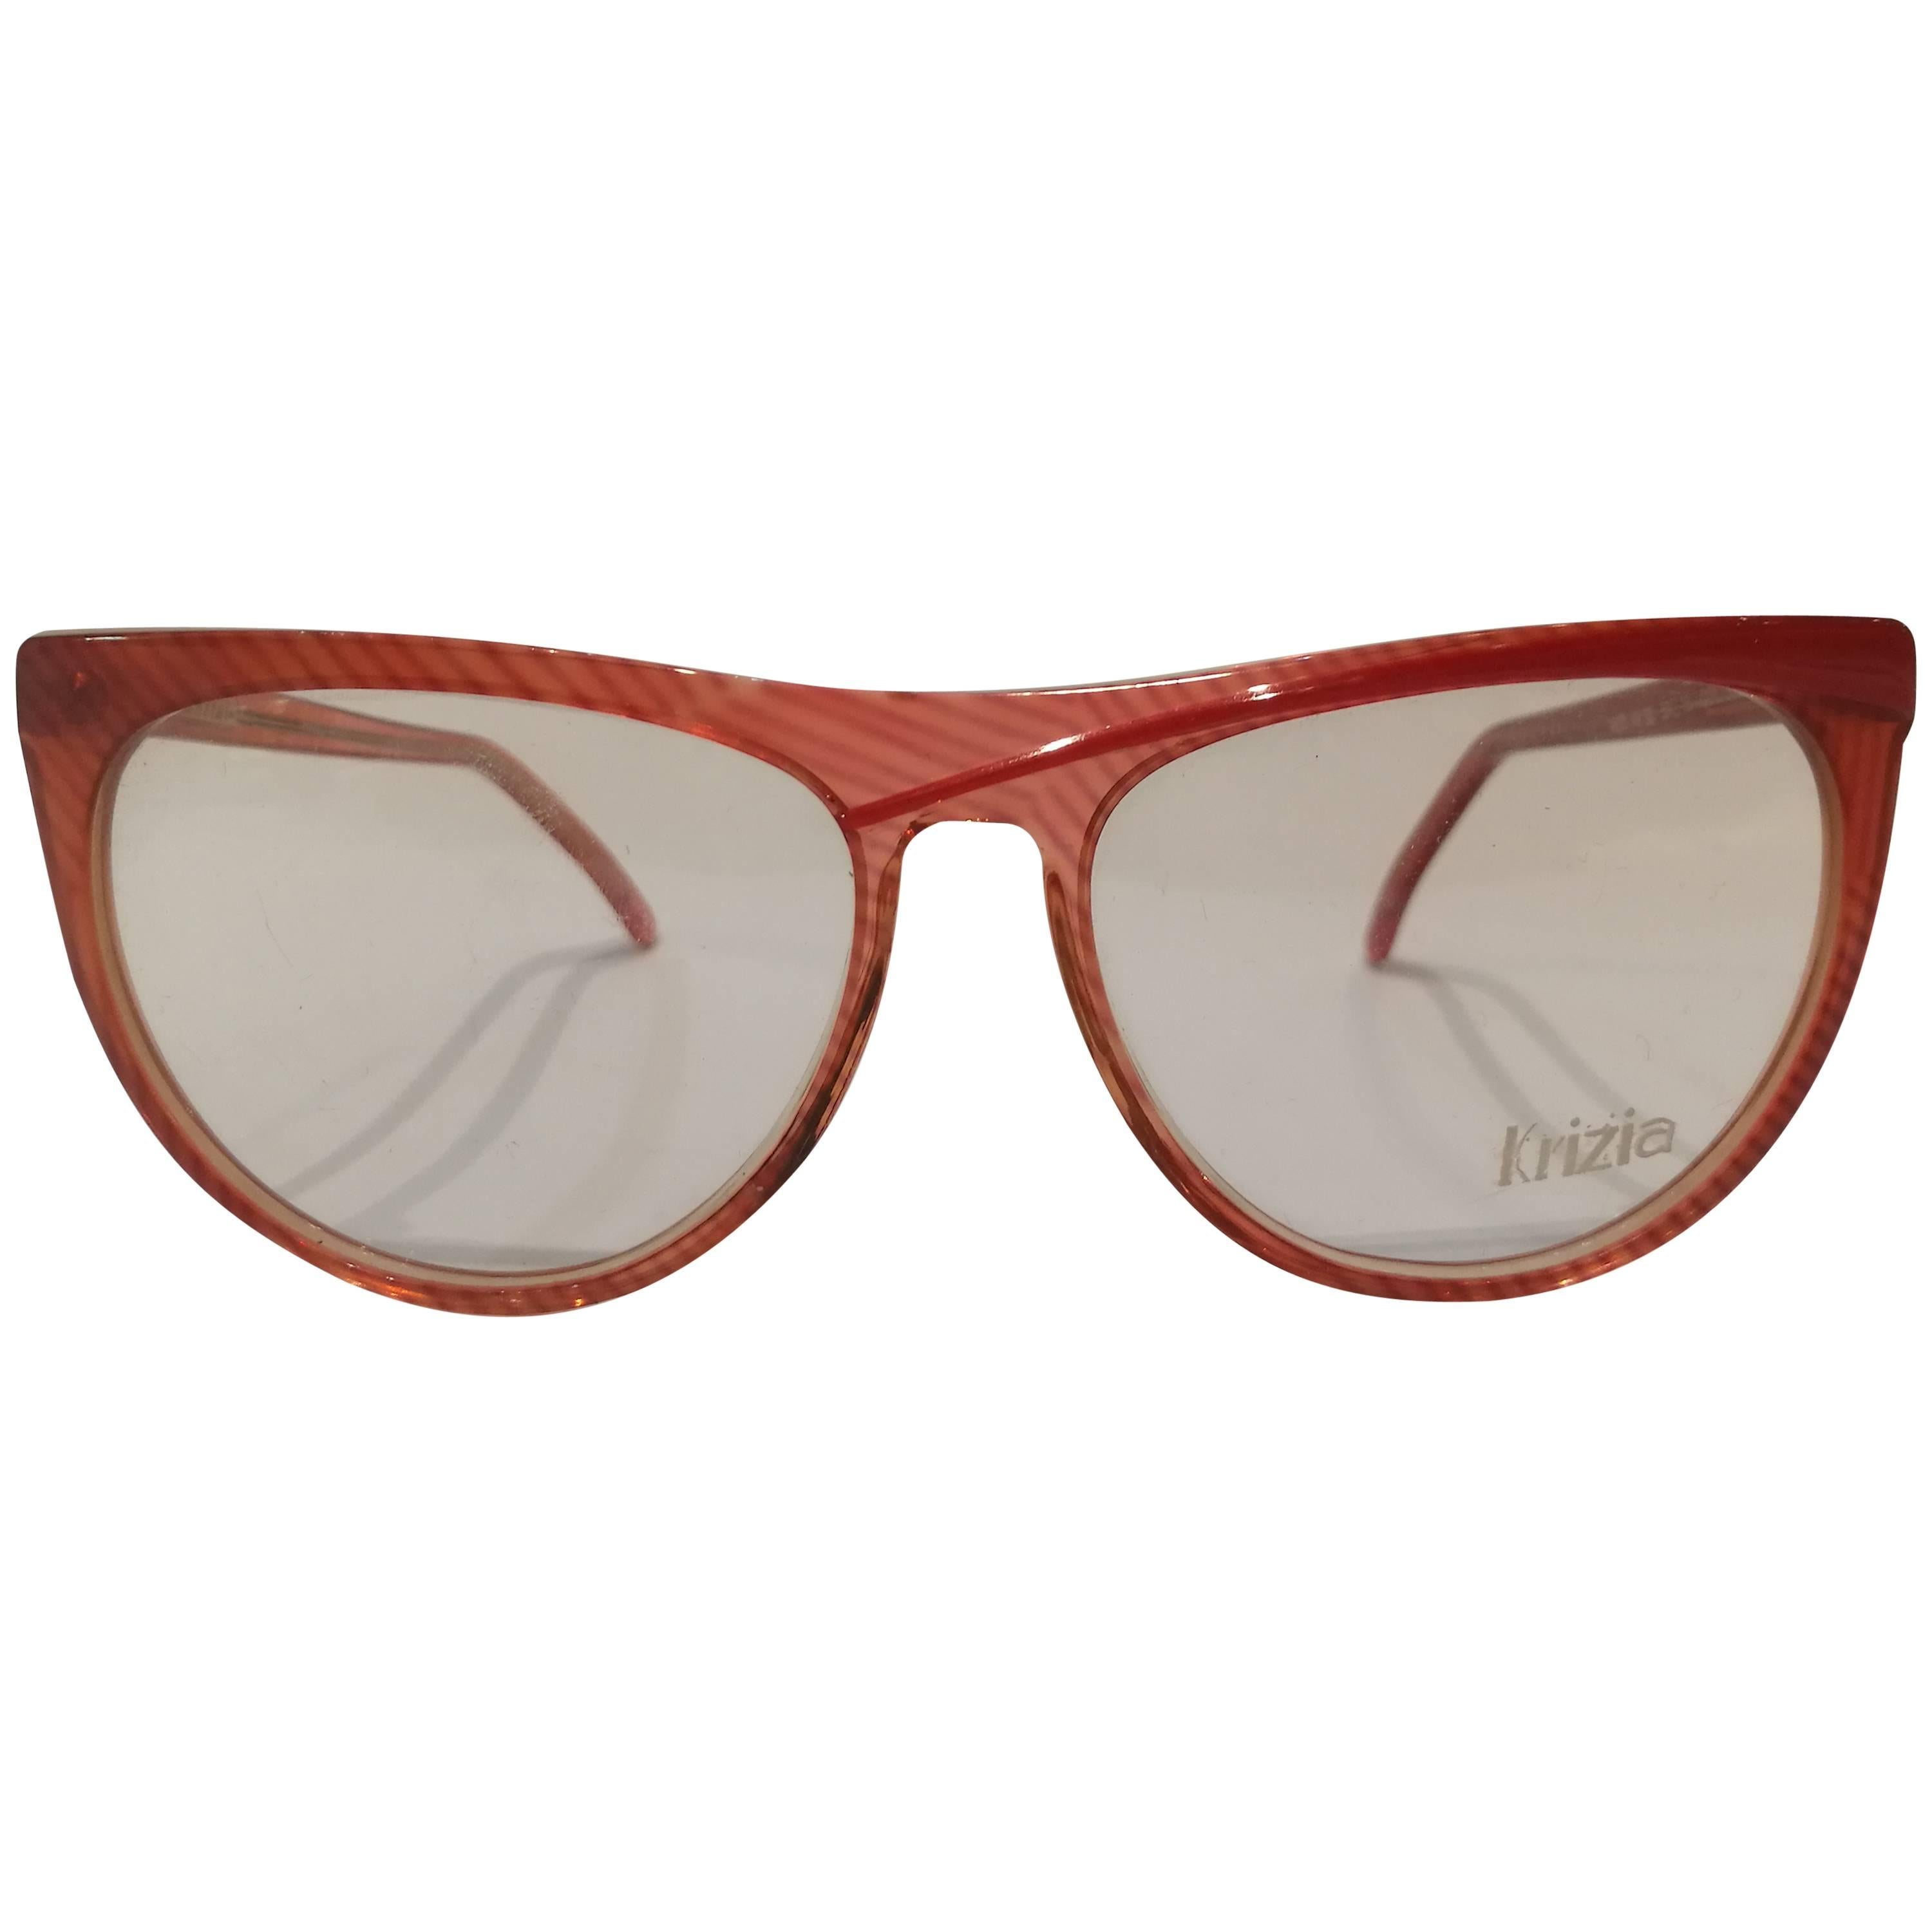 Krizia vintage red frame glasses